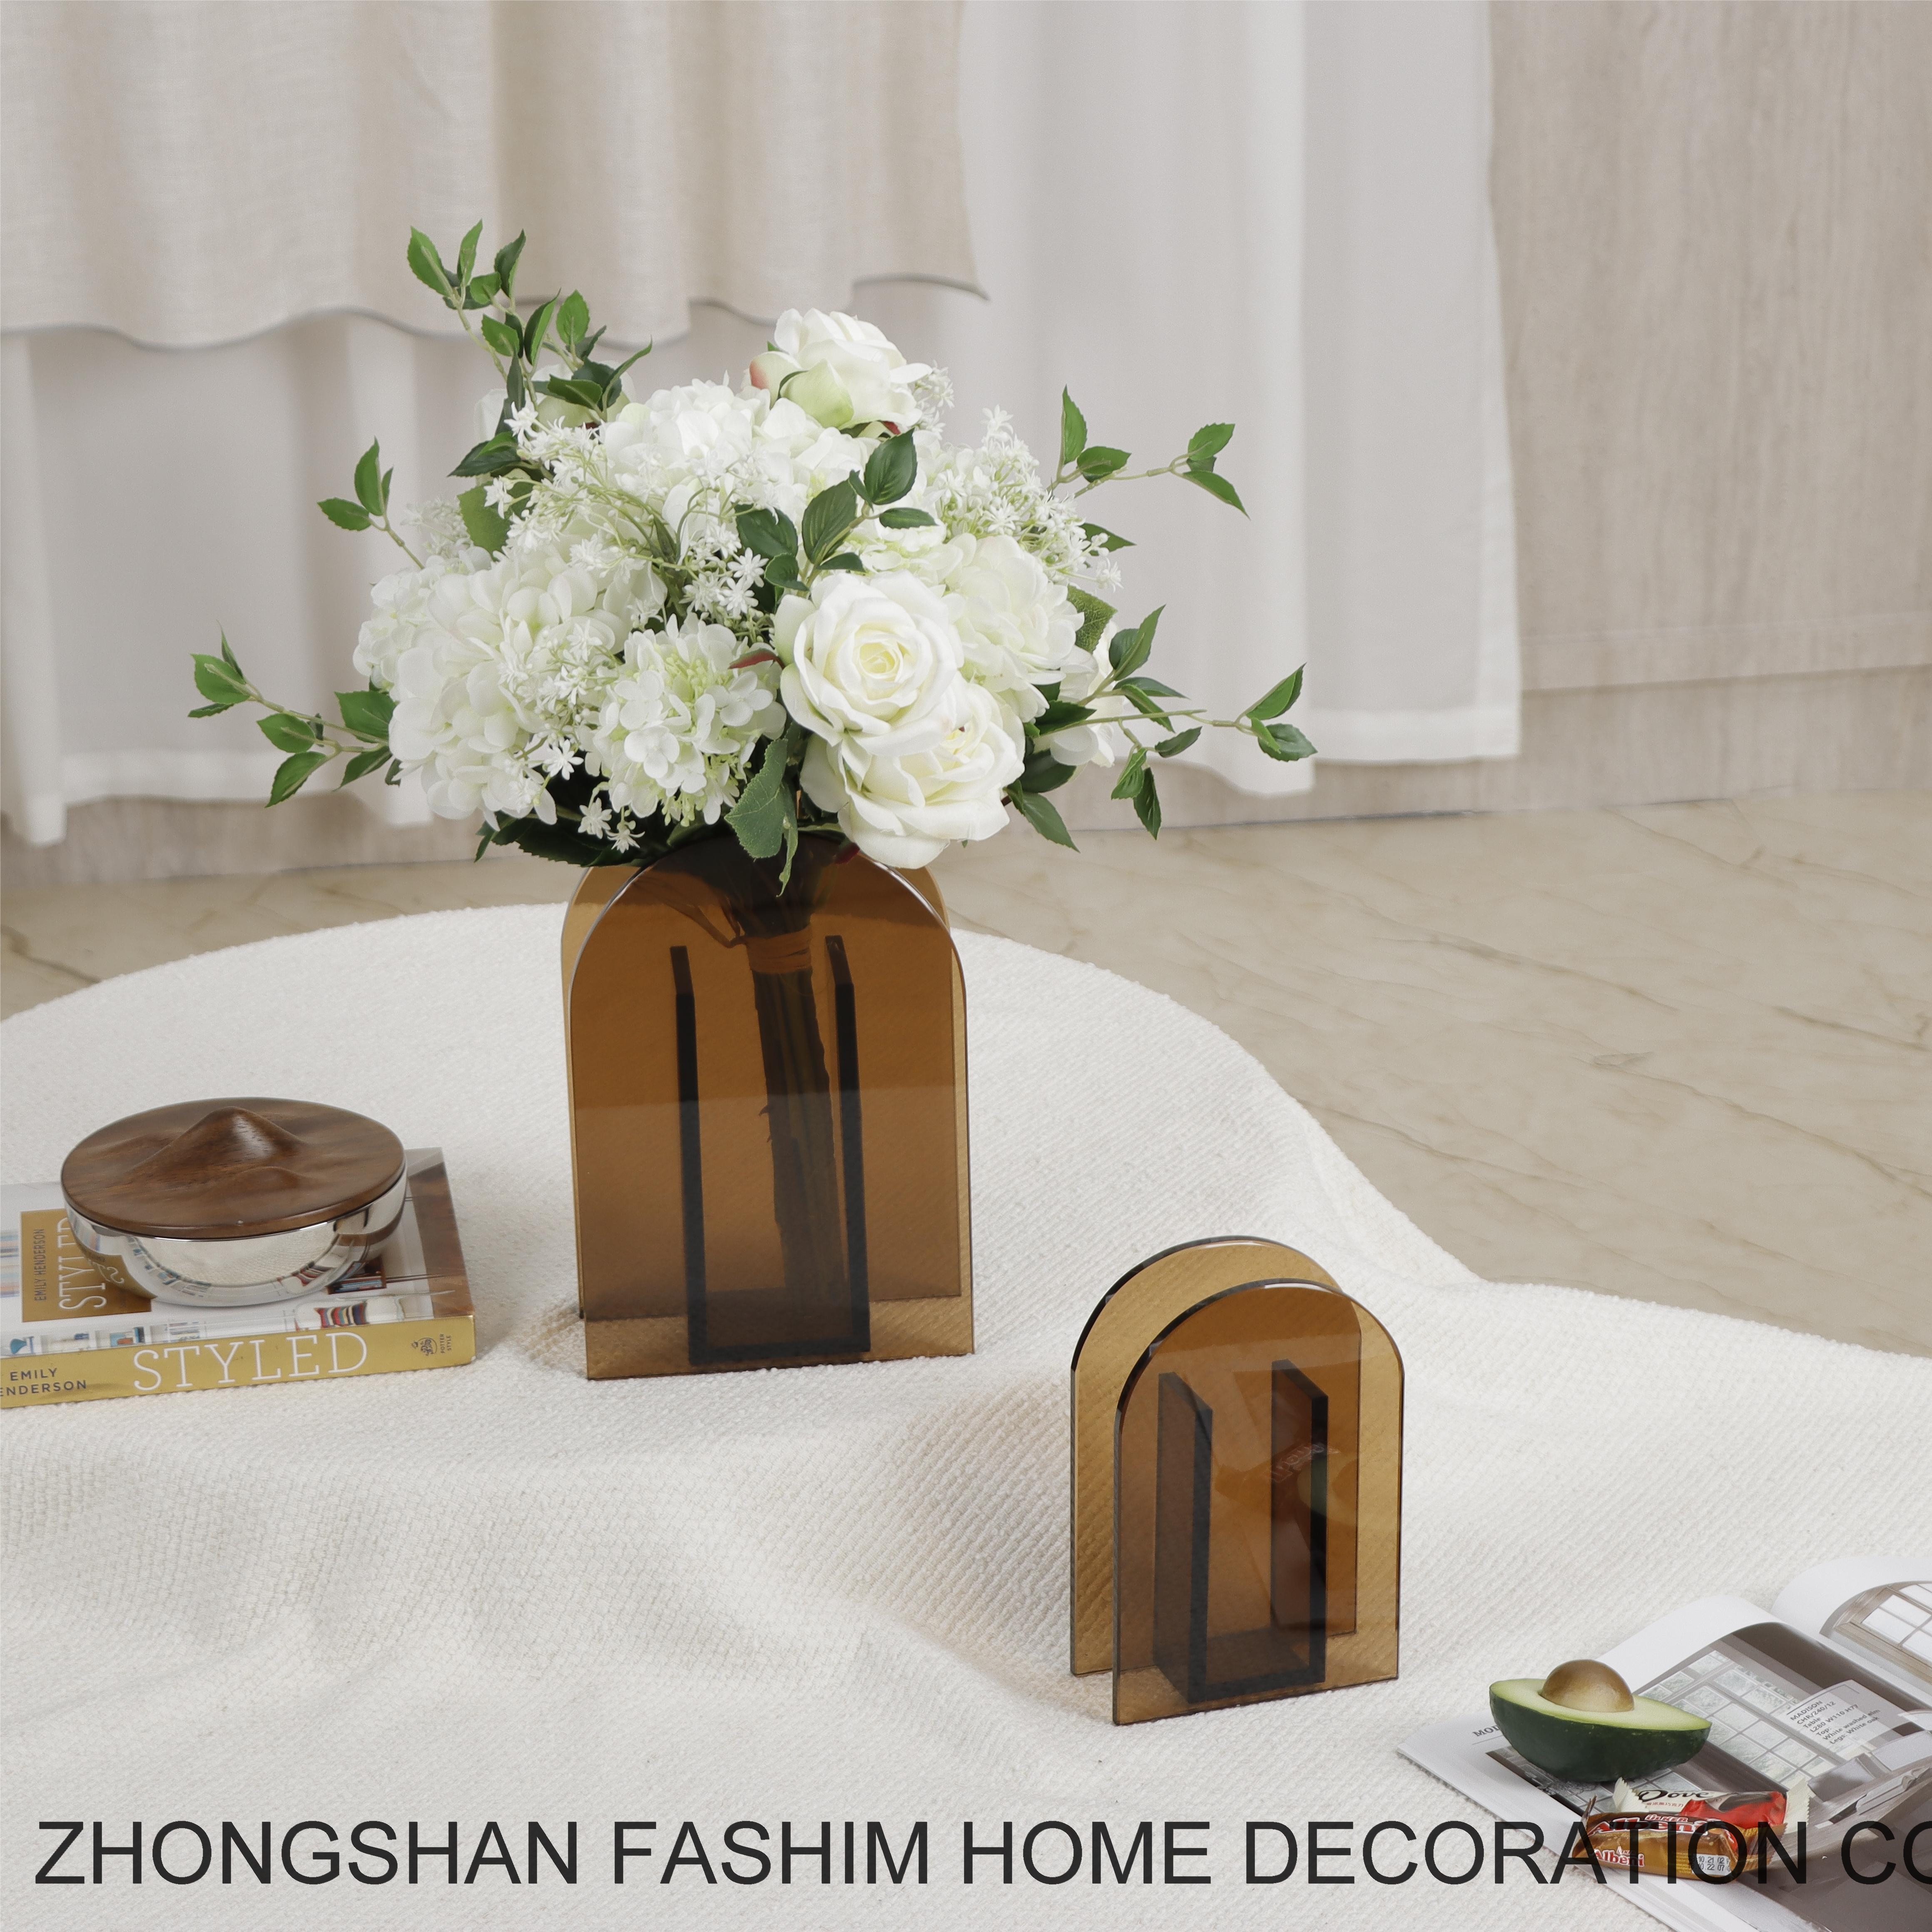 Fashimdecor home decoration ornamental flower vase